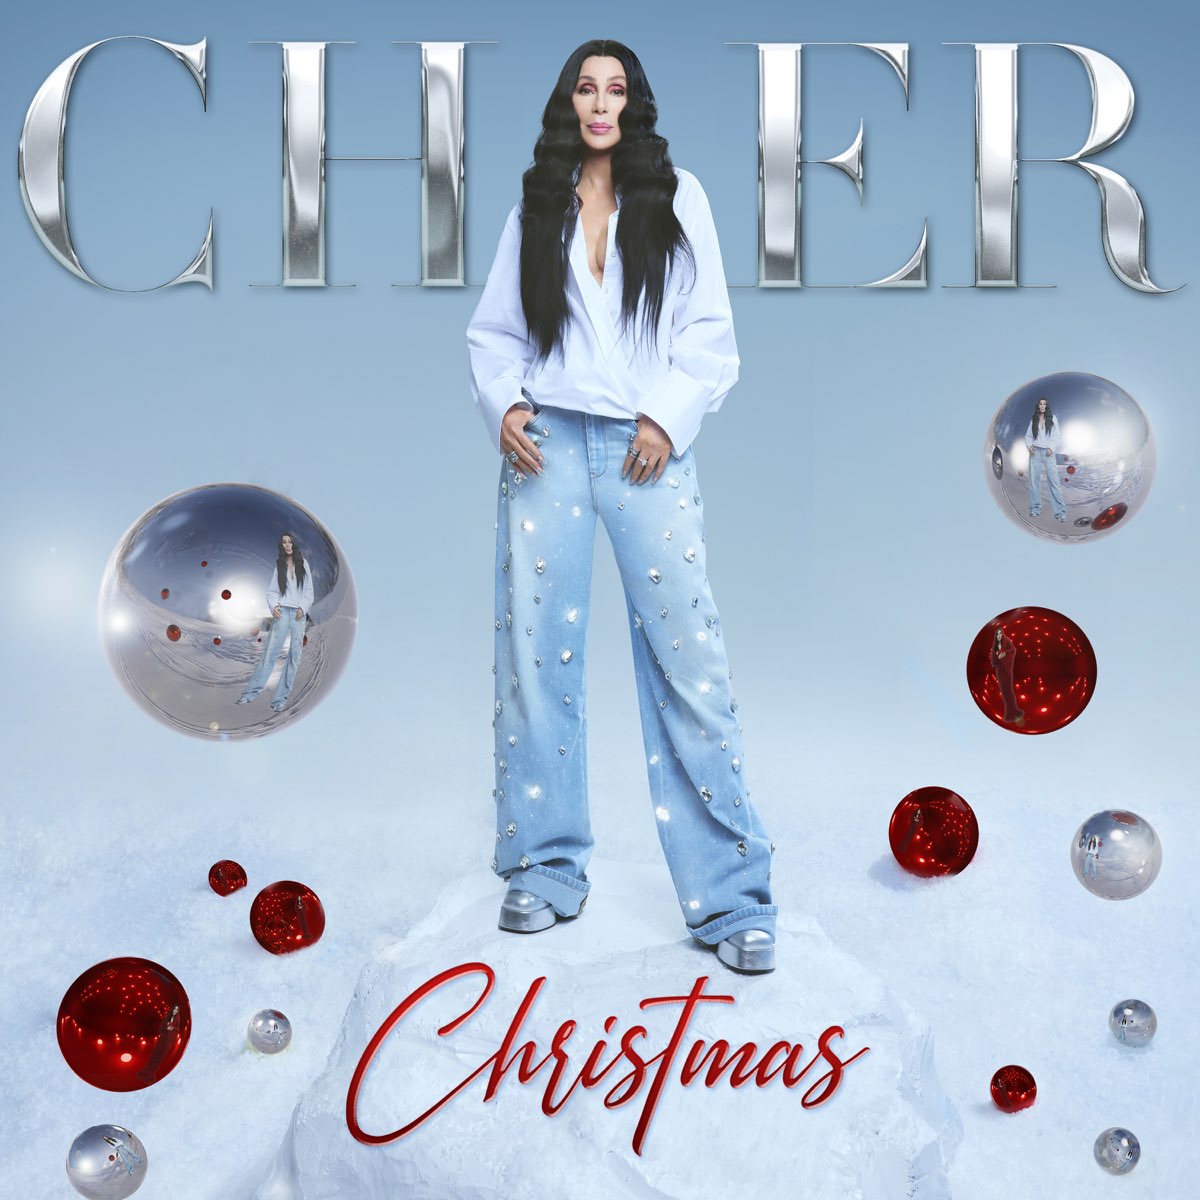 ‎Christmas - Album by Cher - Apple Music